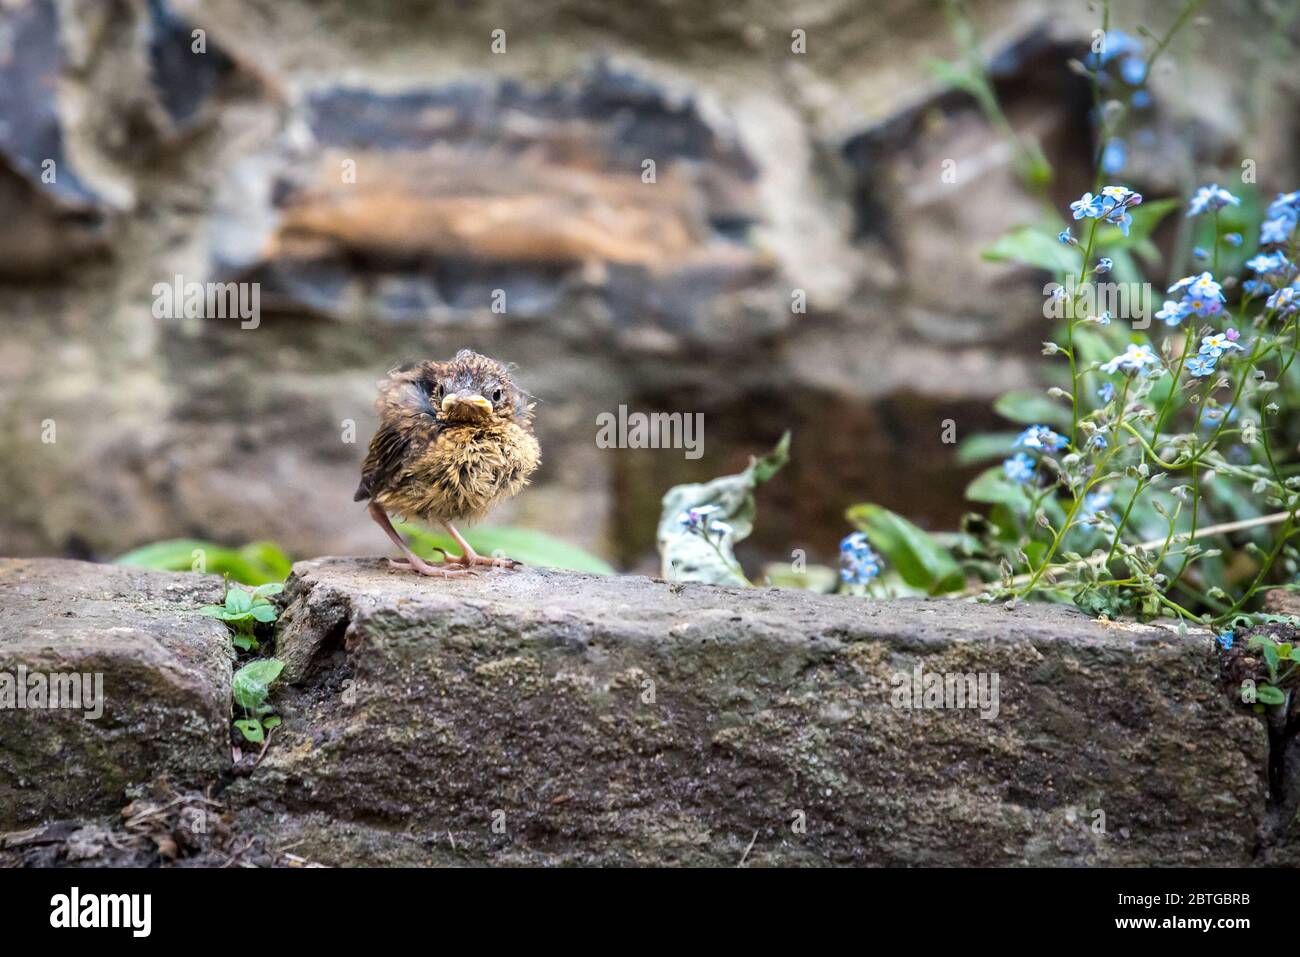 Robin fledgling being fed in a London garden. Urban wildlife in Spring. Stock Photo